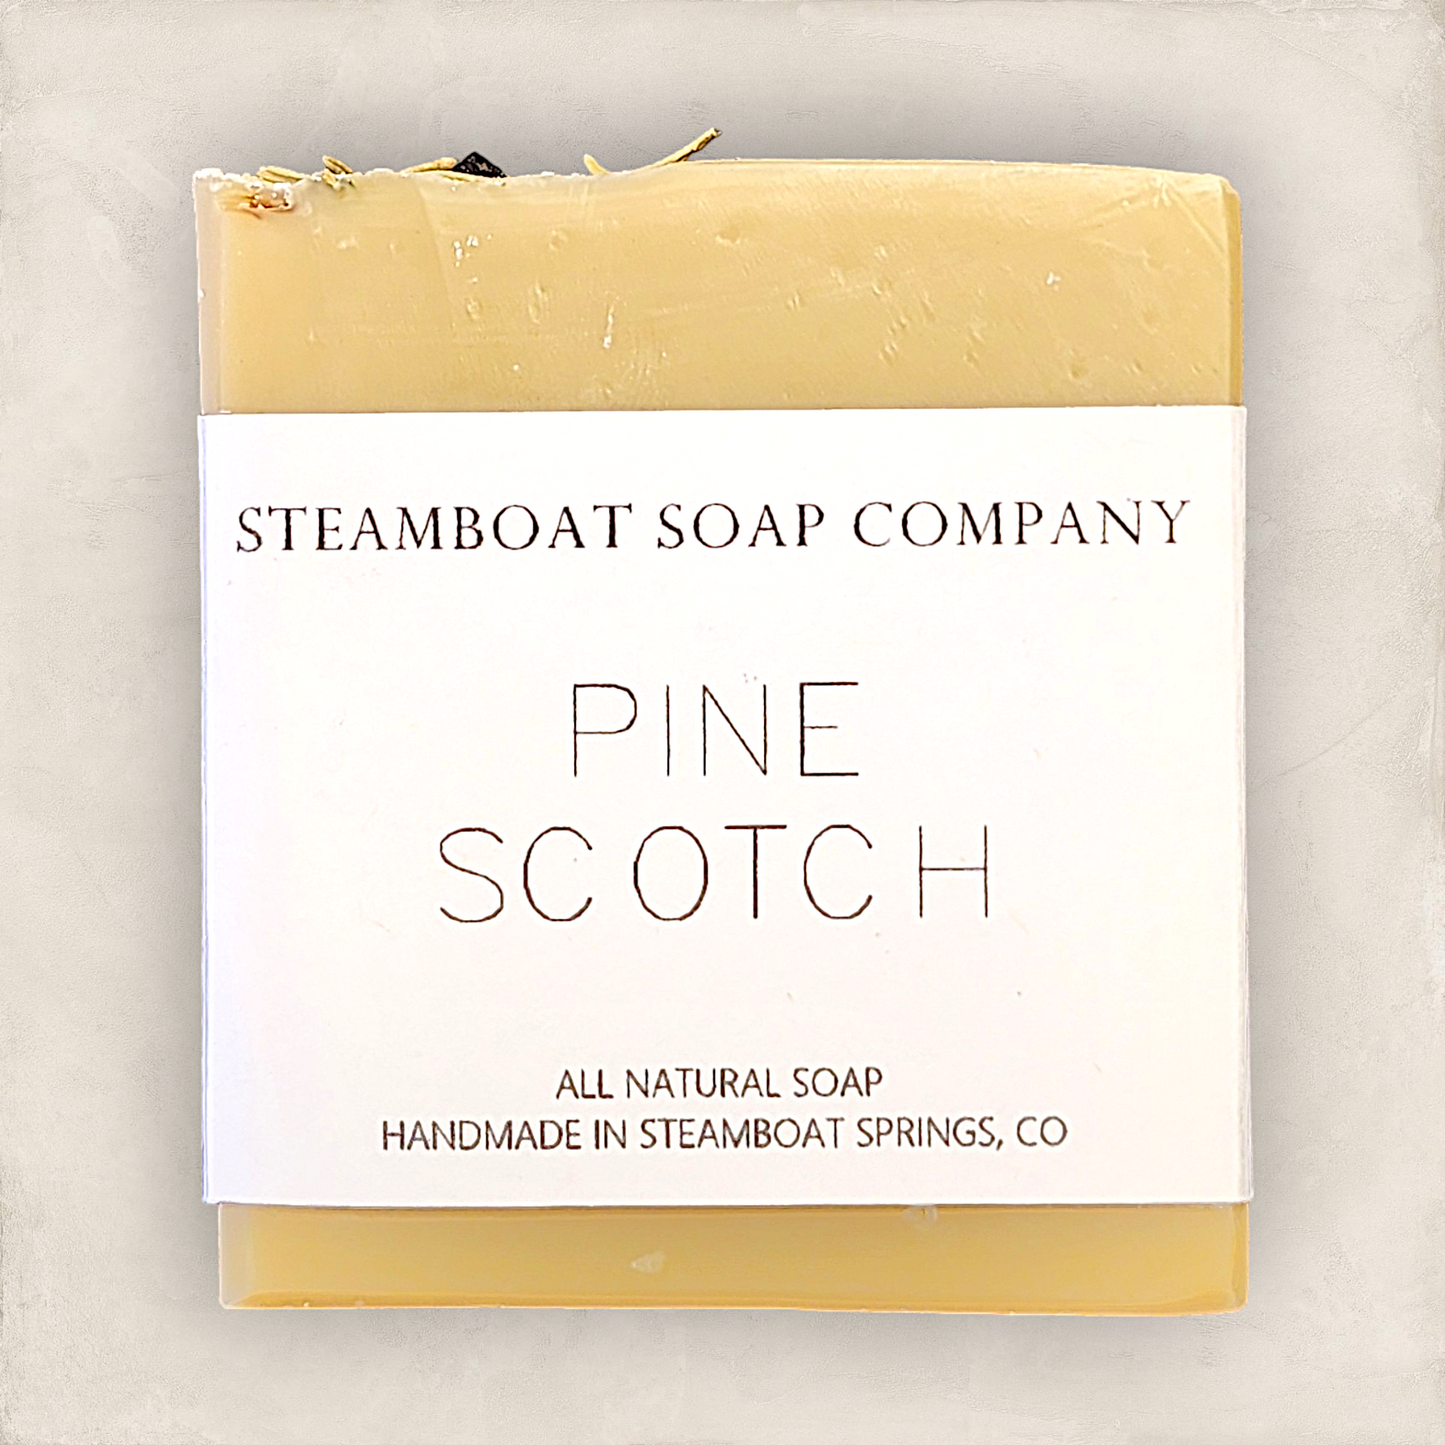 Steamboat Soap Company